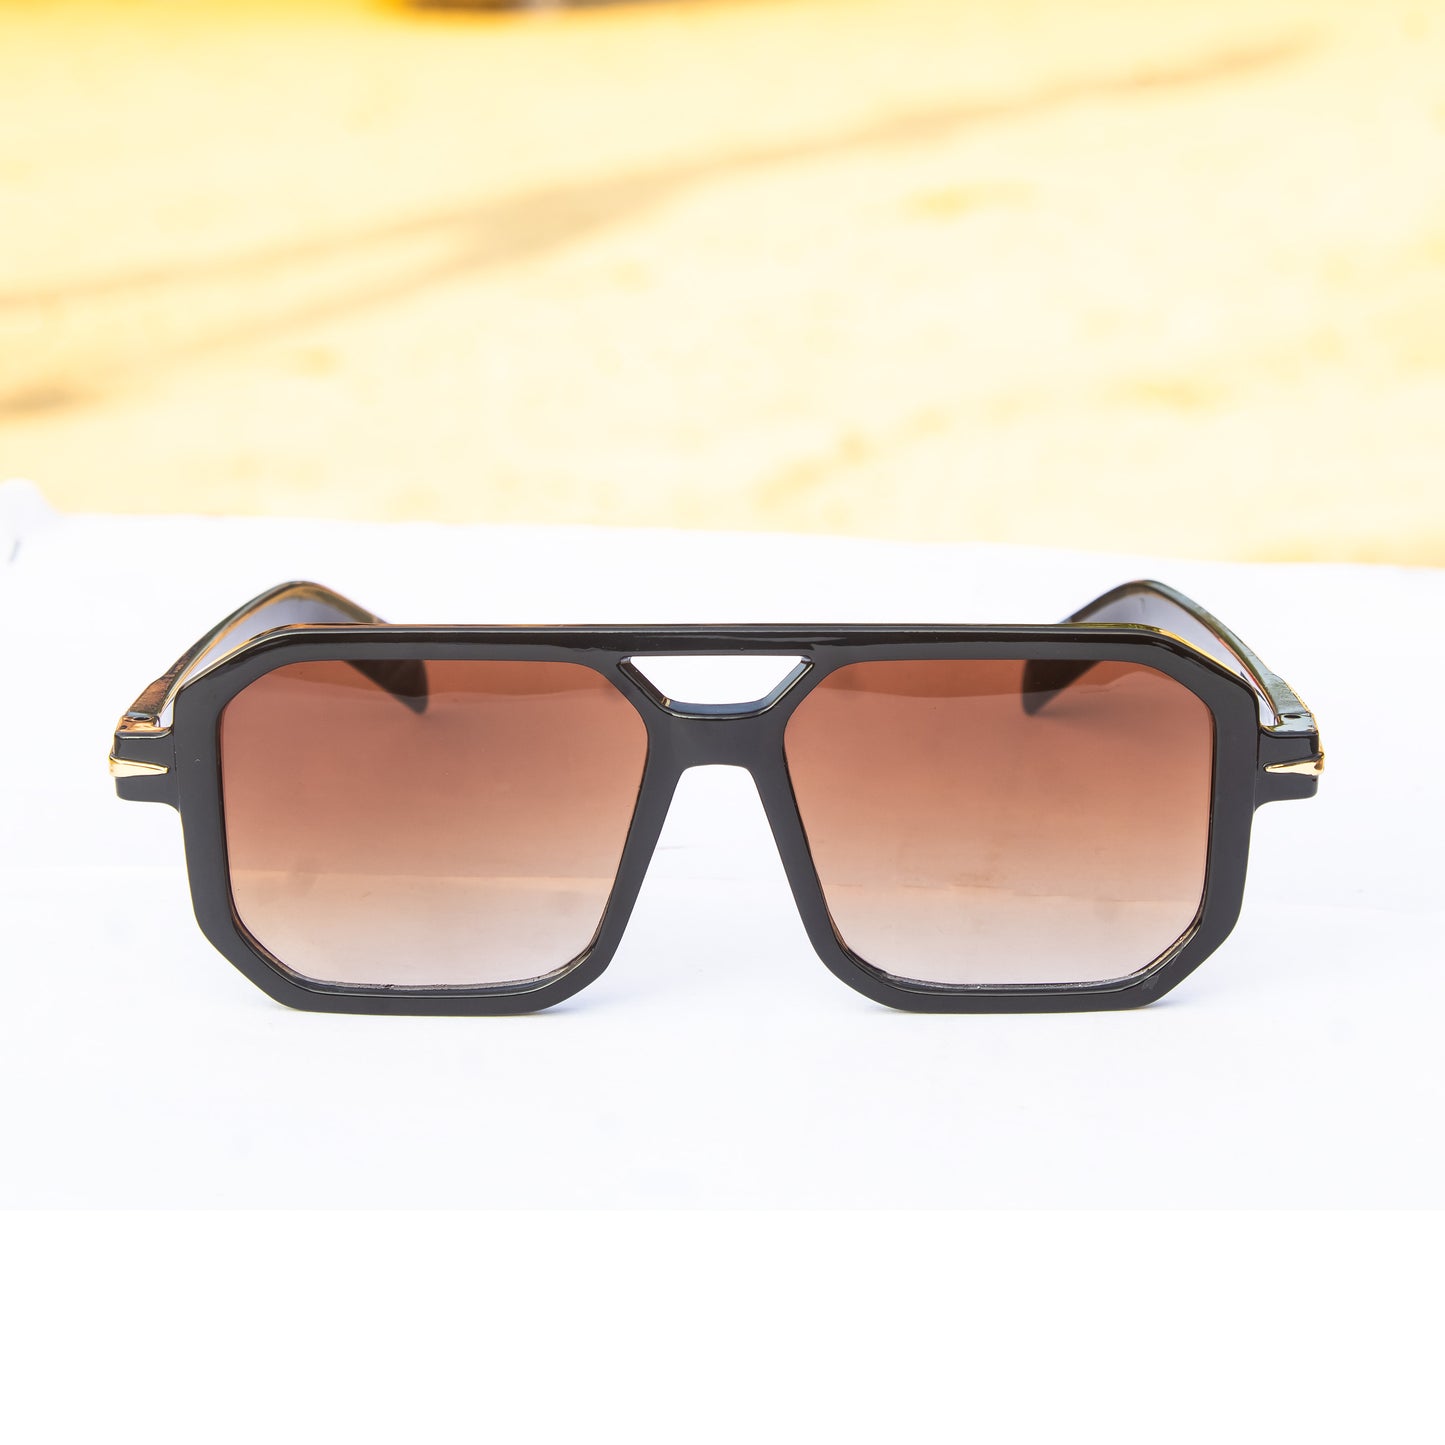 Designer UV400 Gradient Brown Sunglasses For Men And Women